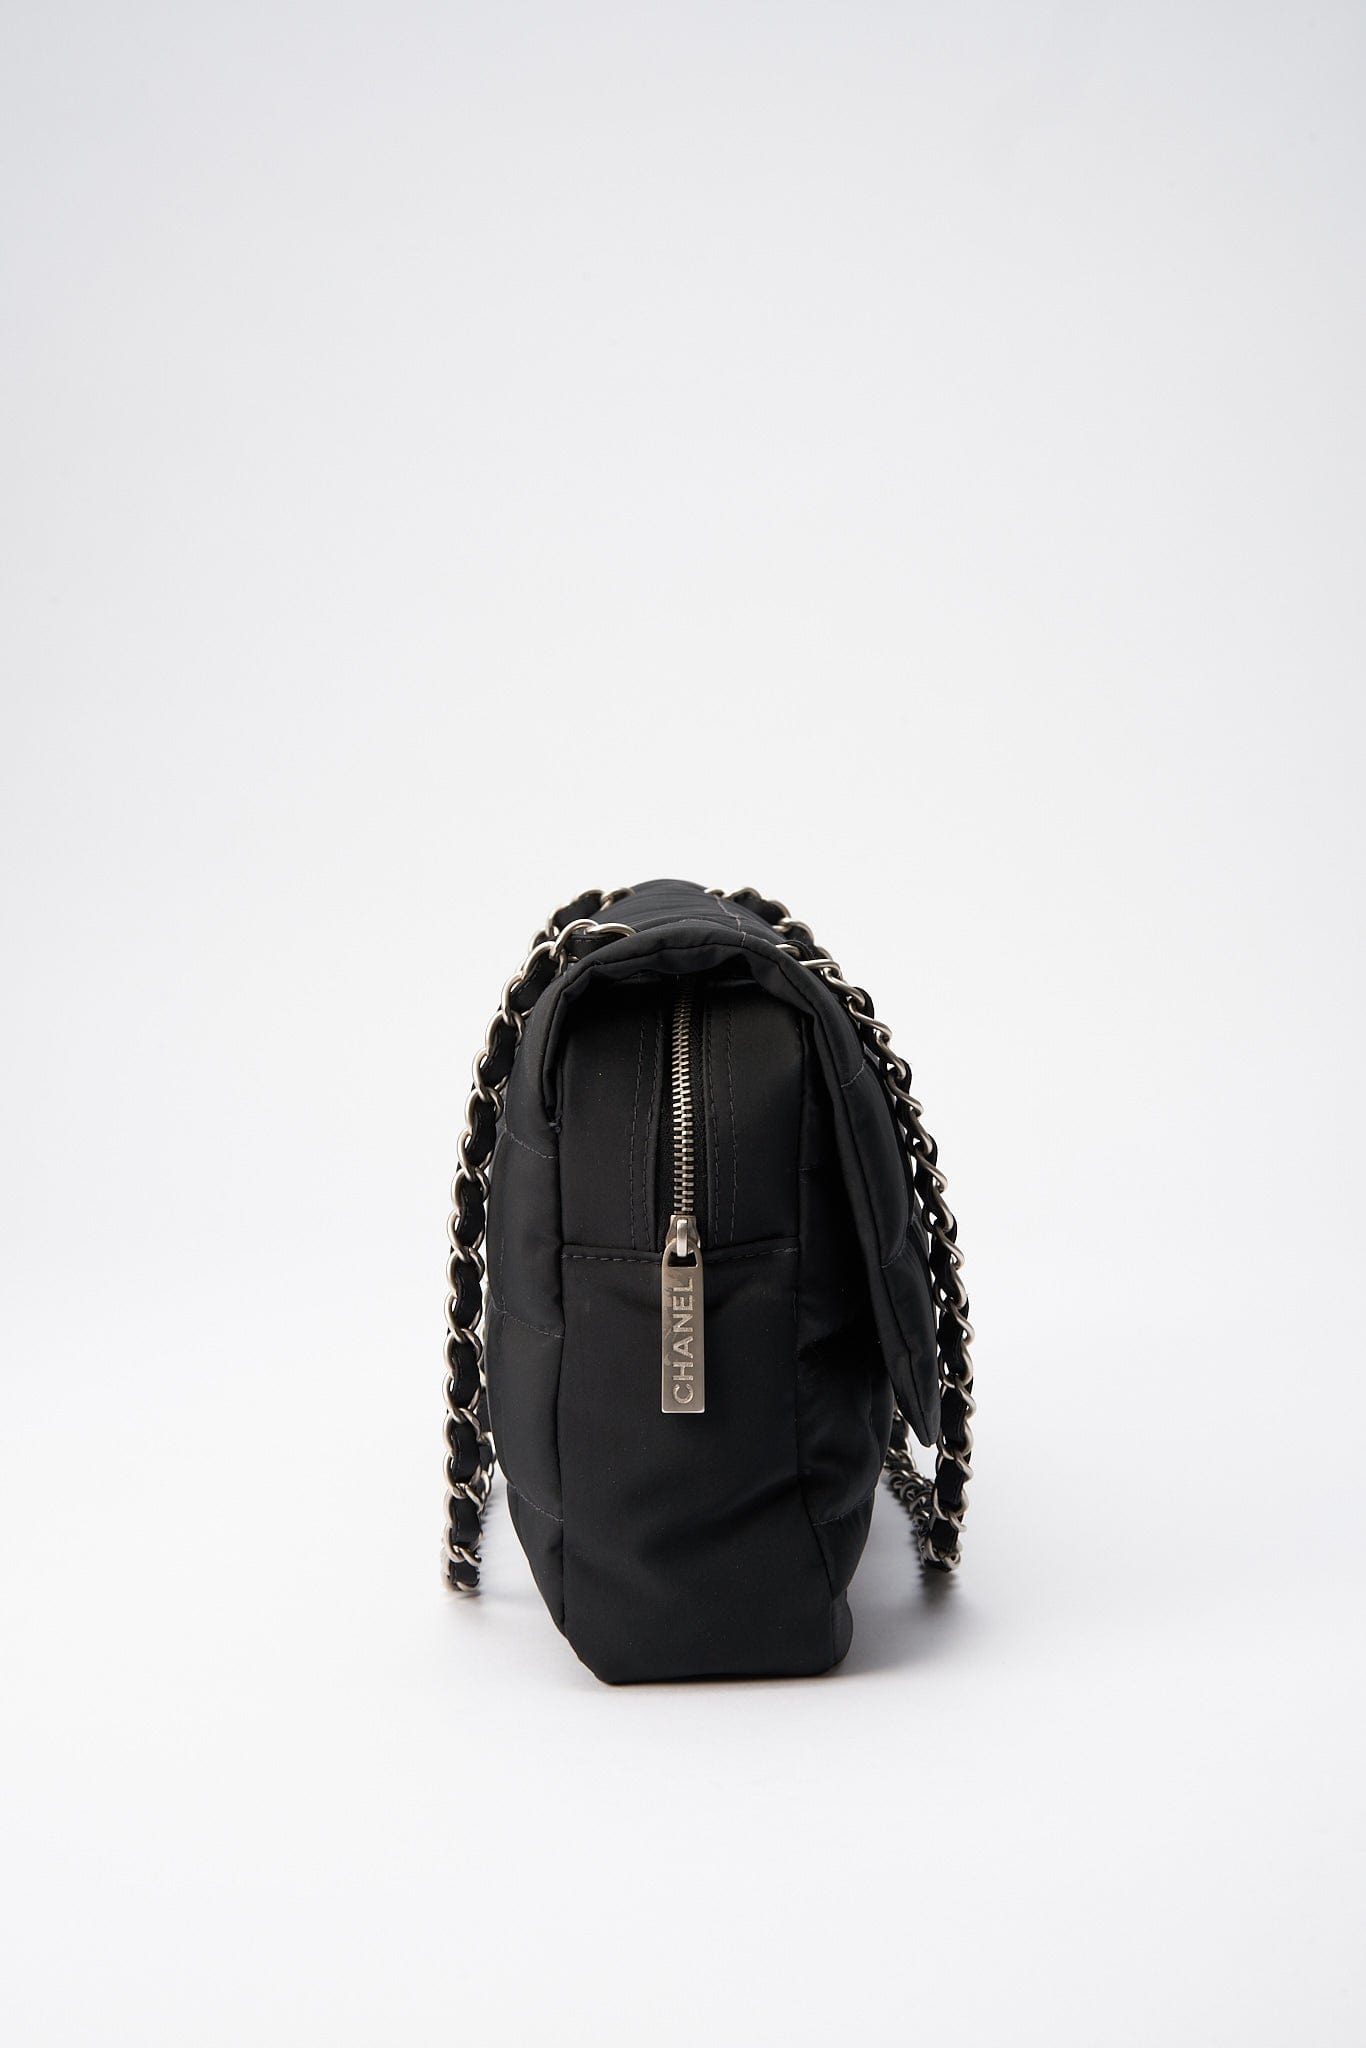 Chanel Black Nylon Large Chocolate Bar Flap Bag